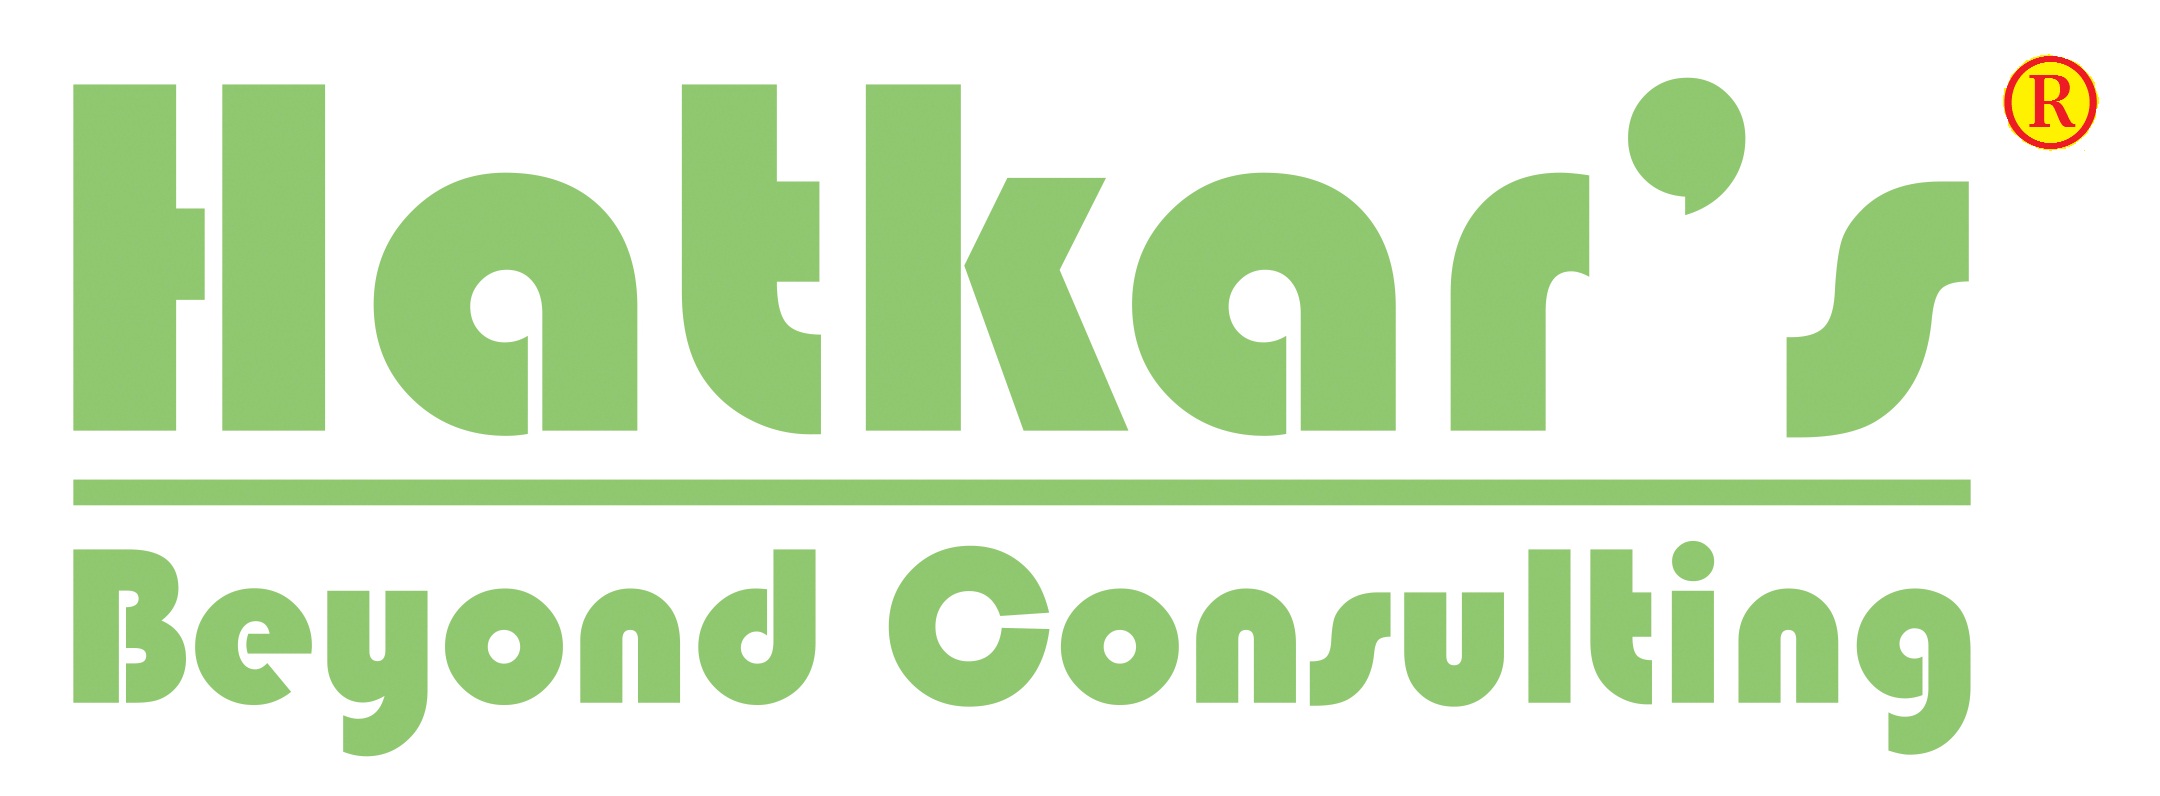 Hatkar's - A Private Limited Company Registration in Mumbai